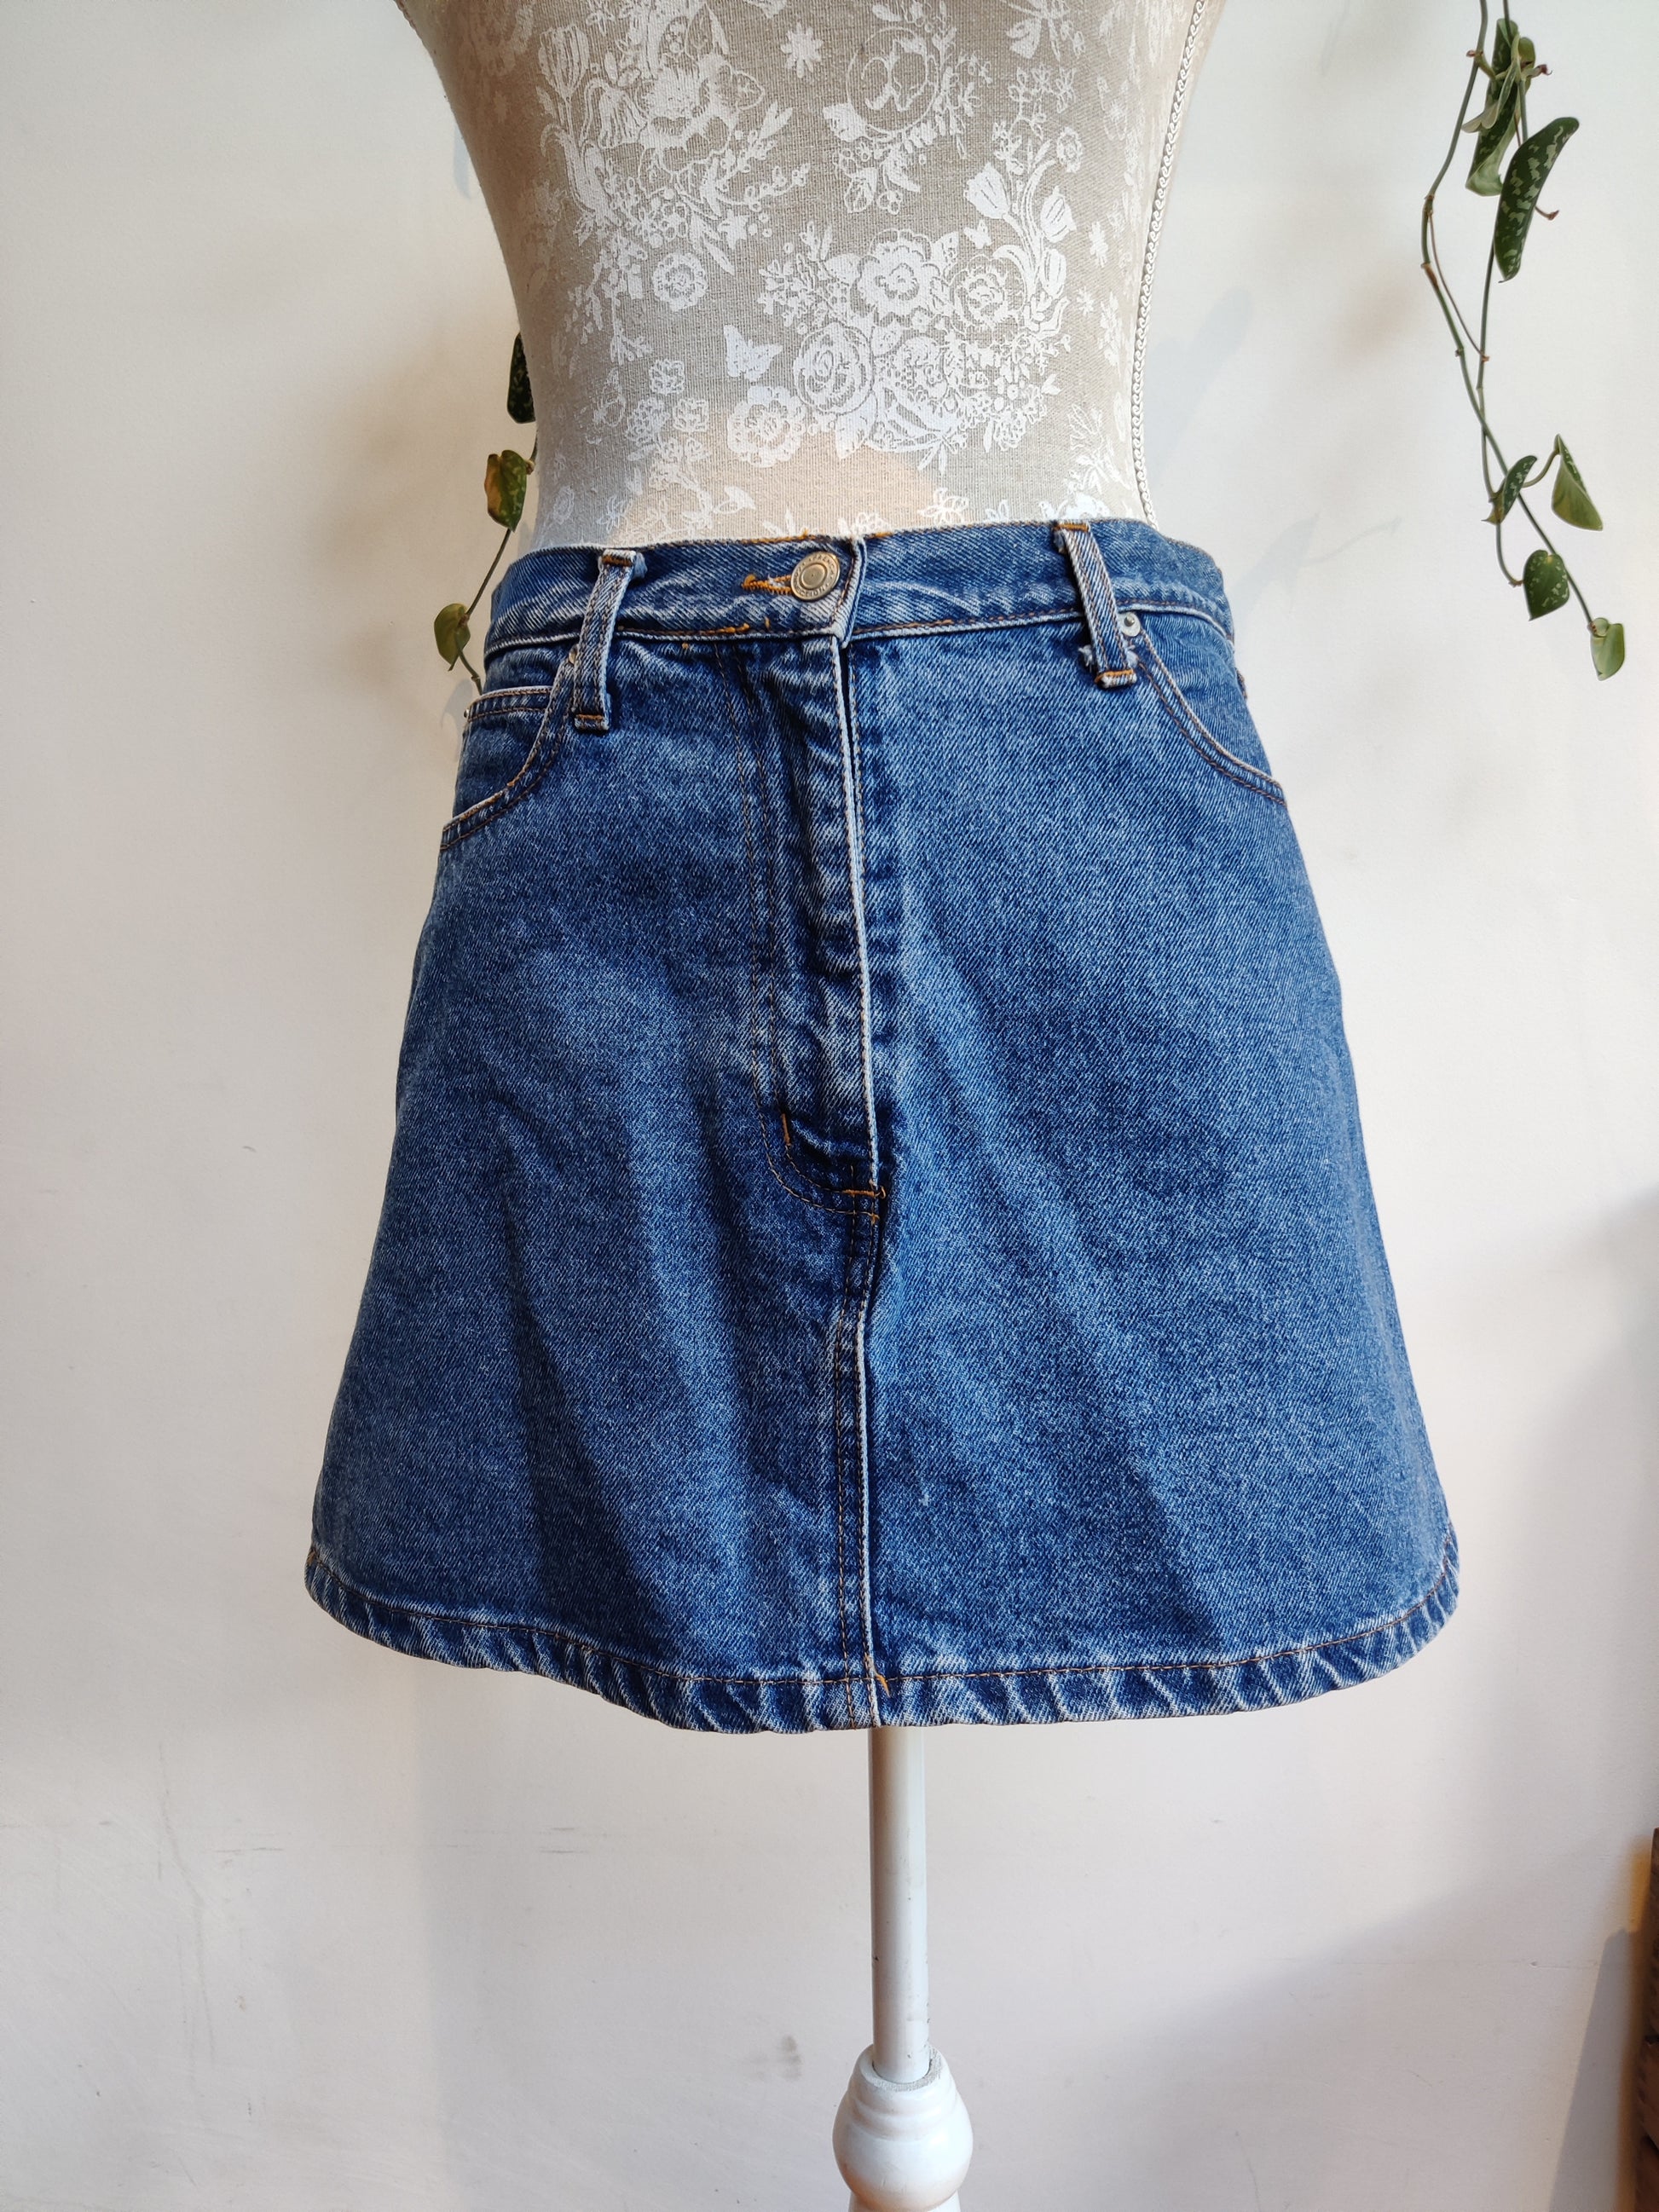 Vintage denim skirt size 10-12